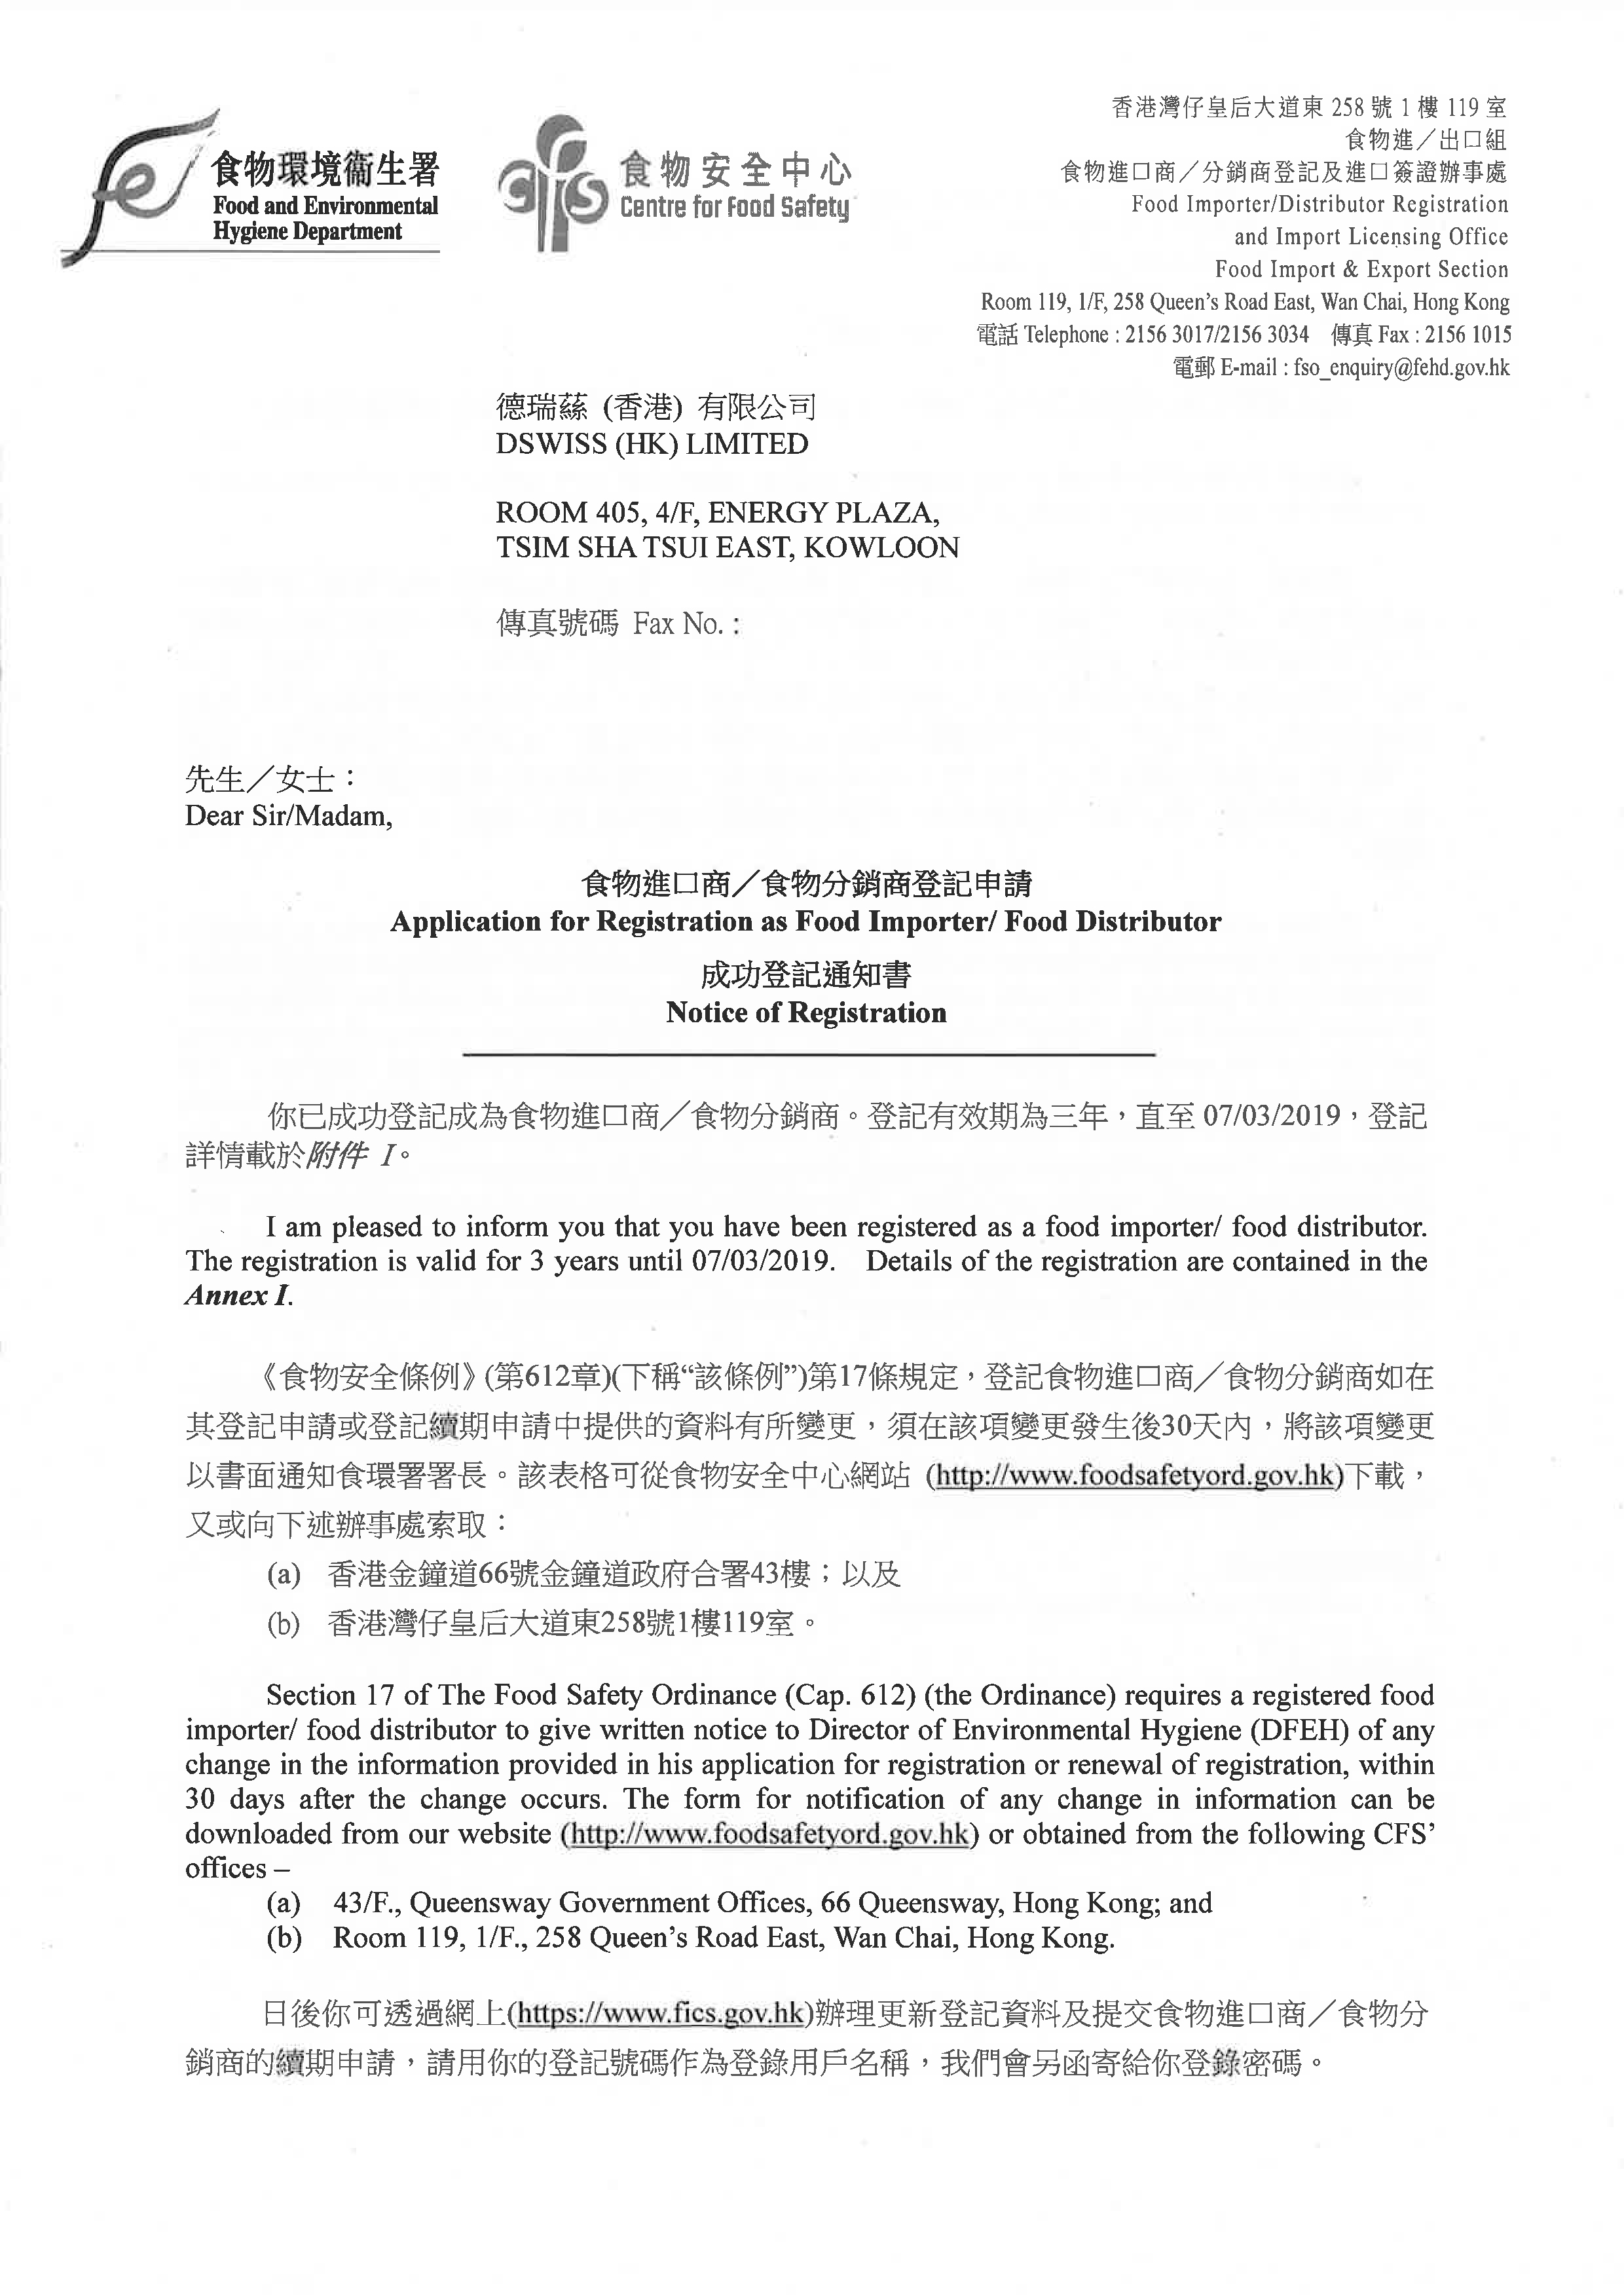 HK Notification Letter - Registered as Food Importer-1.jpg